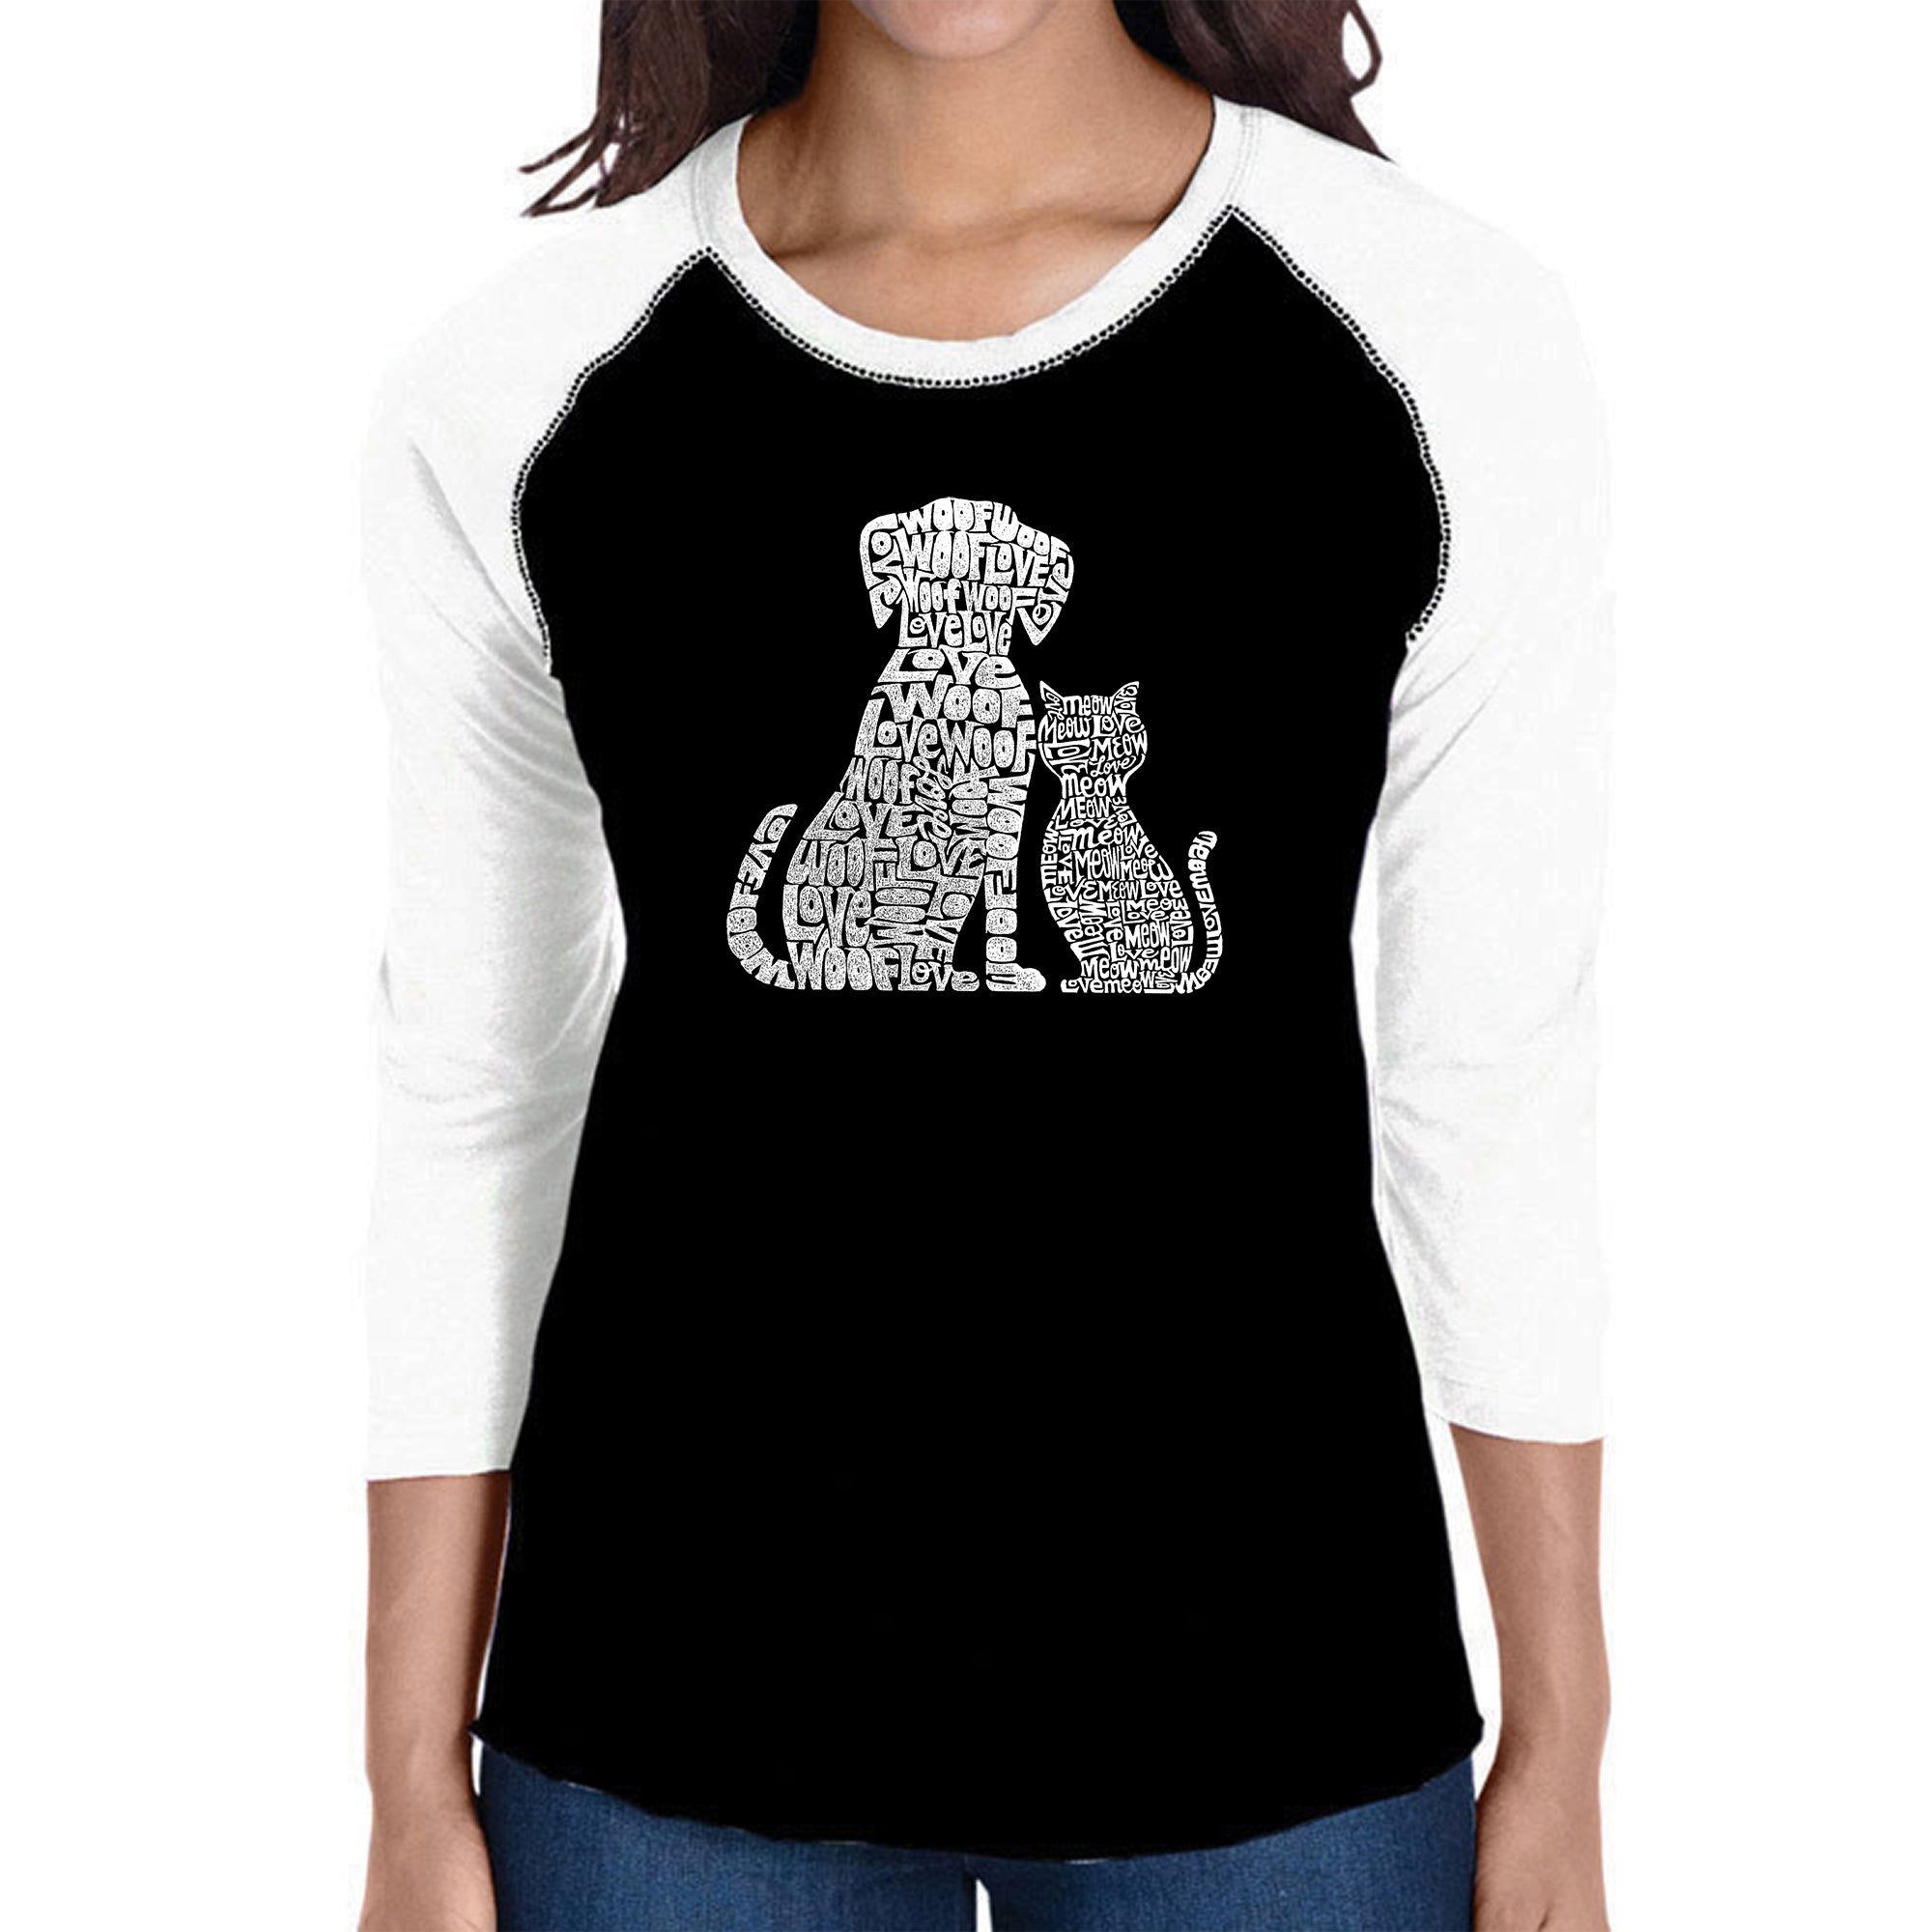 Dogs And Cats - Women's Raglan Baseball Word Art T-Shirt - Black/White - Medium